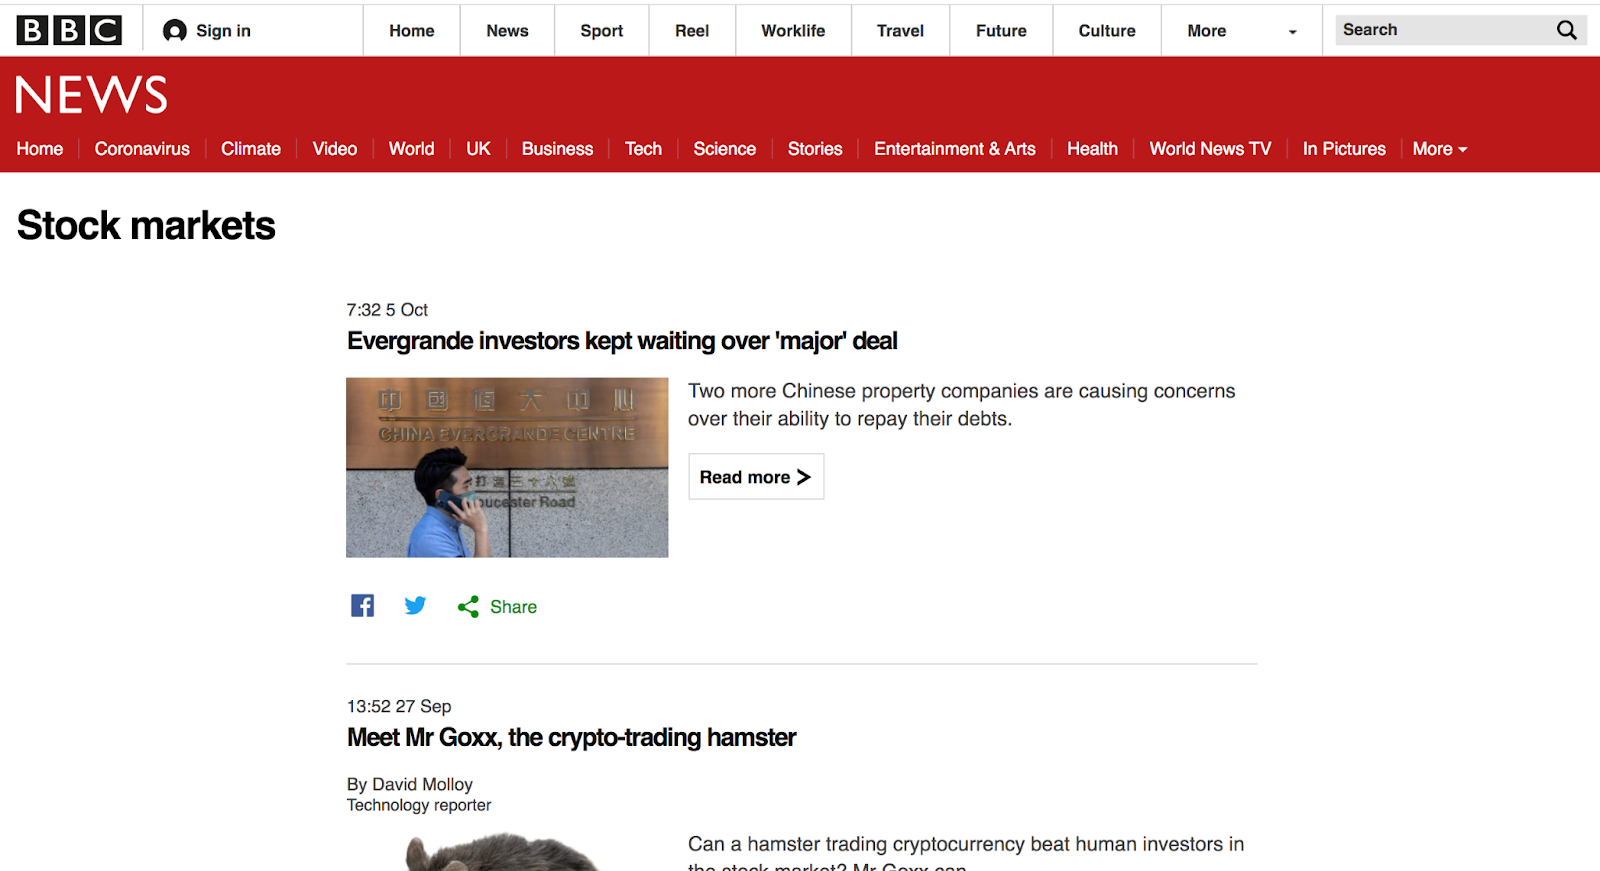 The BBC stock market news website